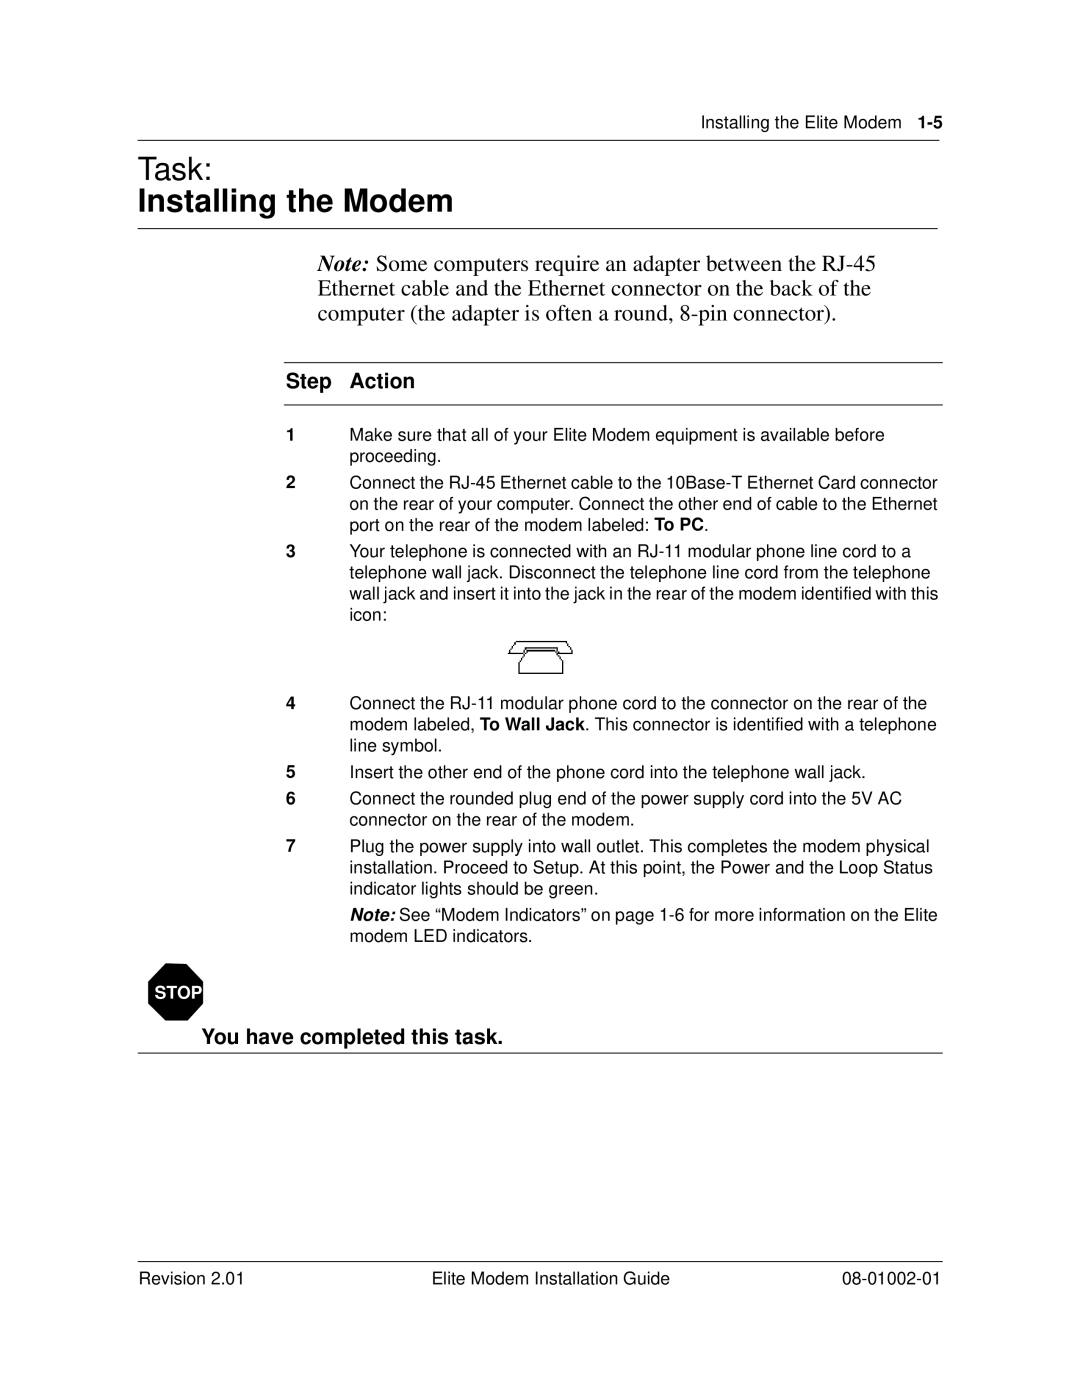 Zhone Technologies 08-01002-01 manual Task, Installing the Modem, Stop 